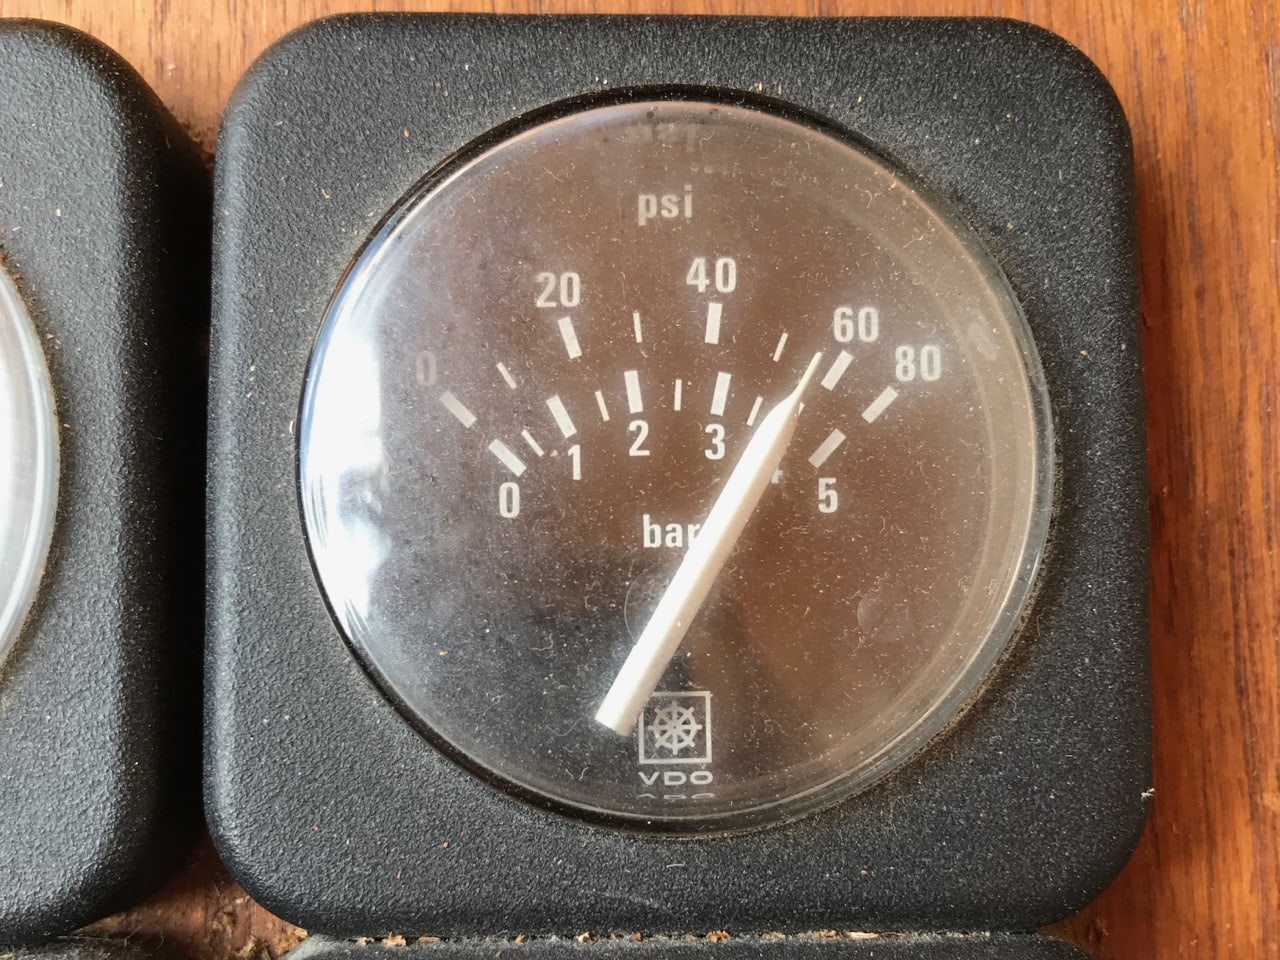 Original oil pressure gauge